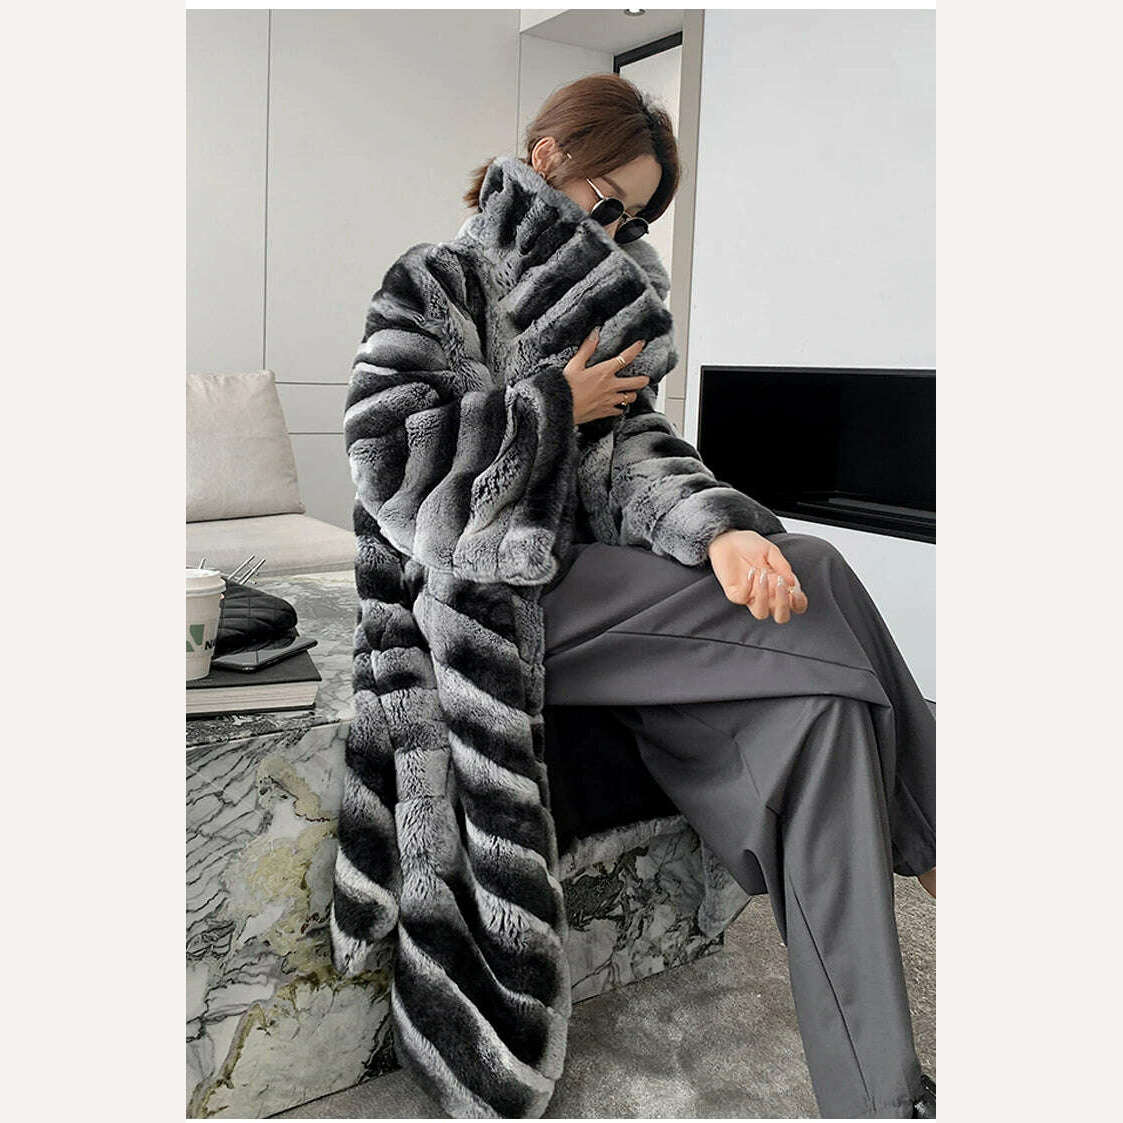 KIMLUD, 2023 Best Seller New Real Rex Rabbit Fur Coat Winter Long Fur Coat Women Fashion Thick Warm Winter Luxury, KIMLUD Women's Clothes